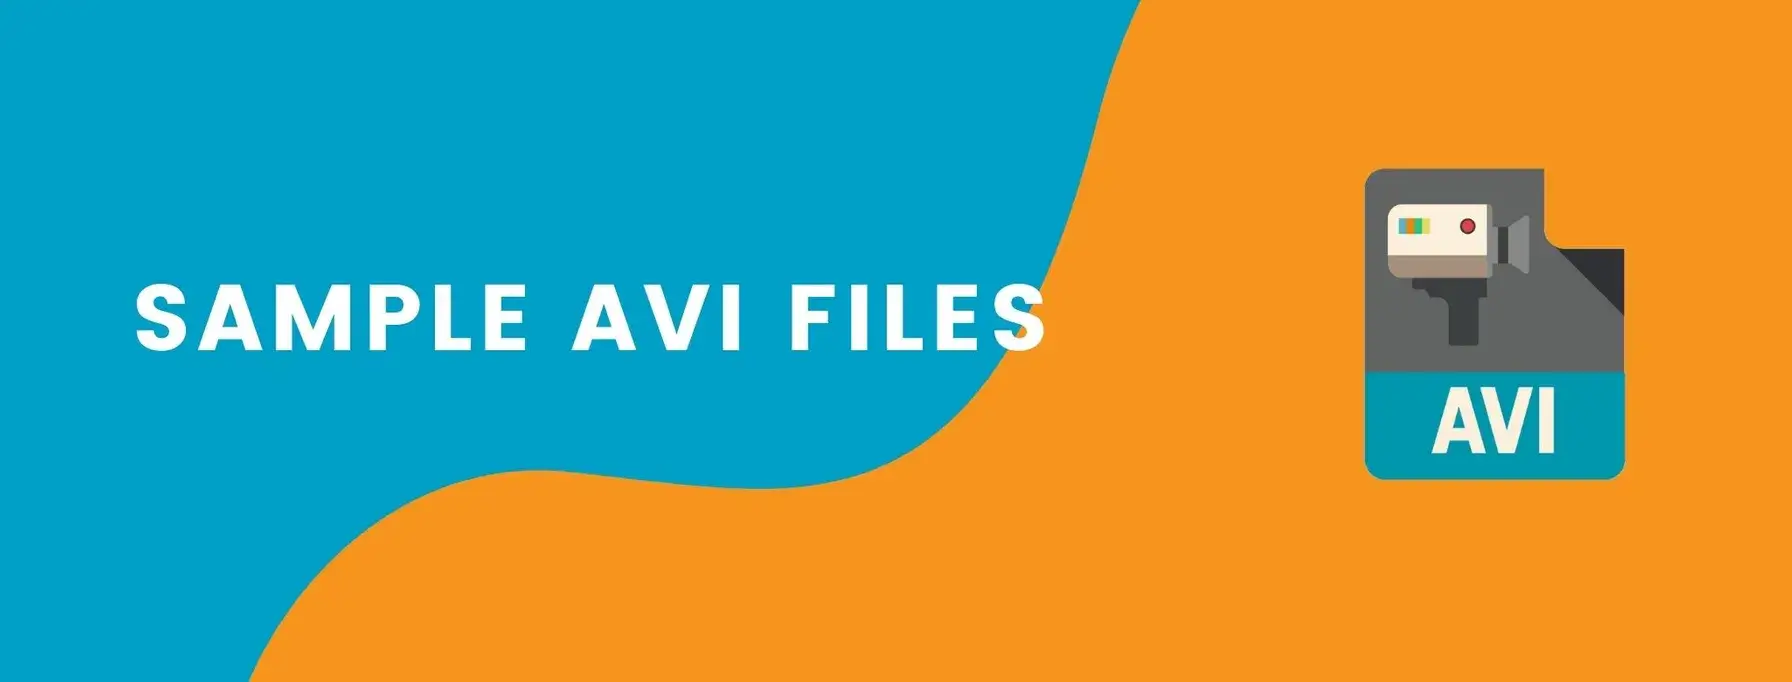 Sample AVI Files